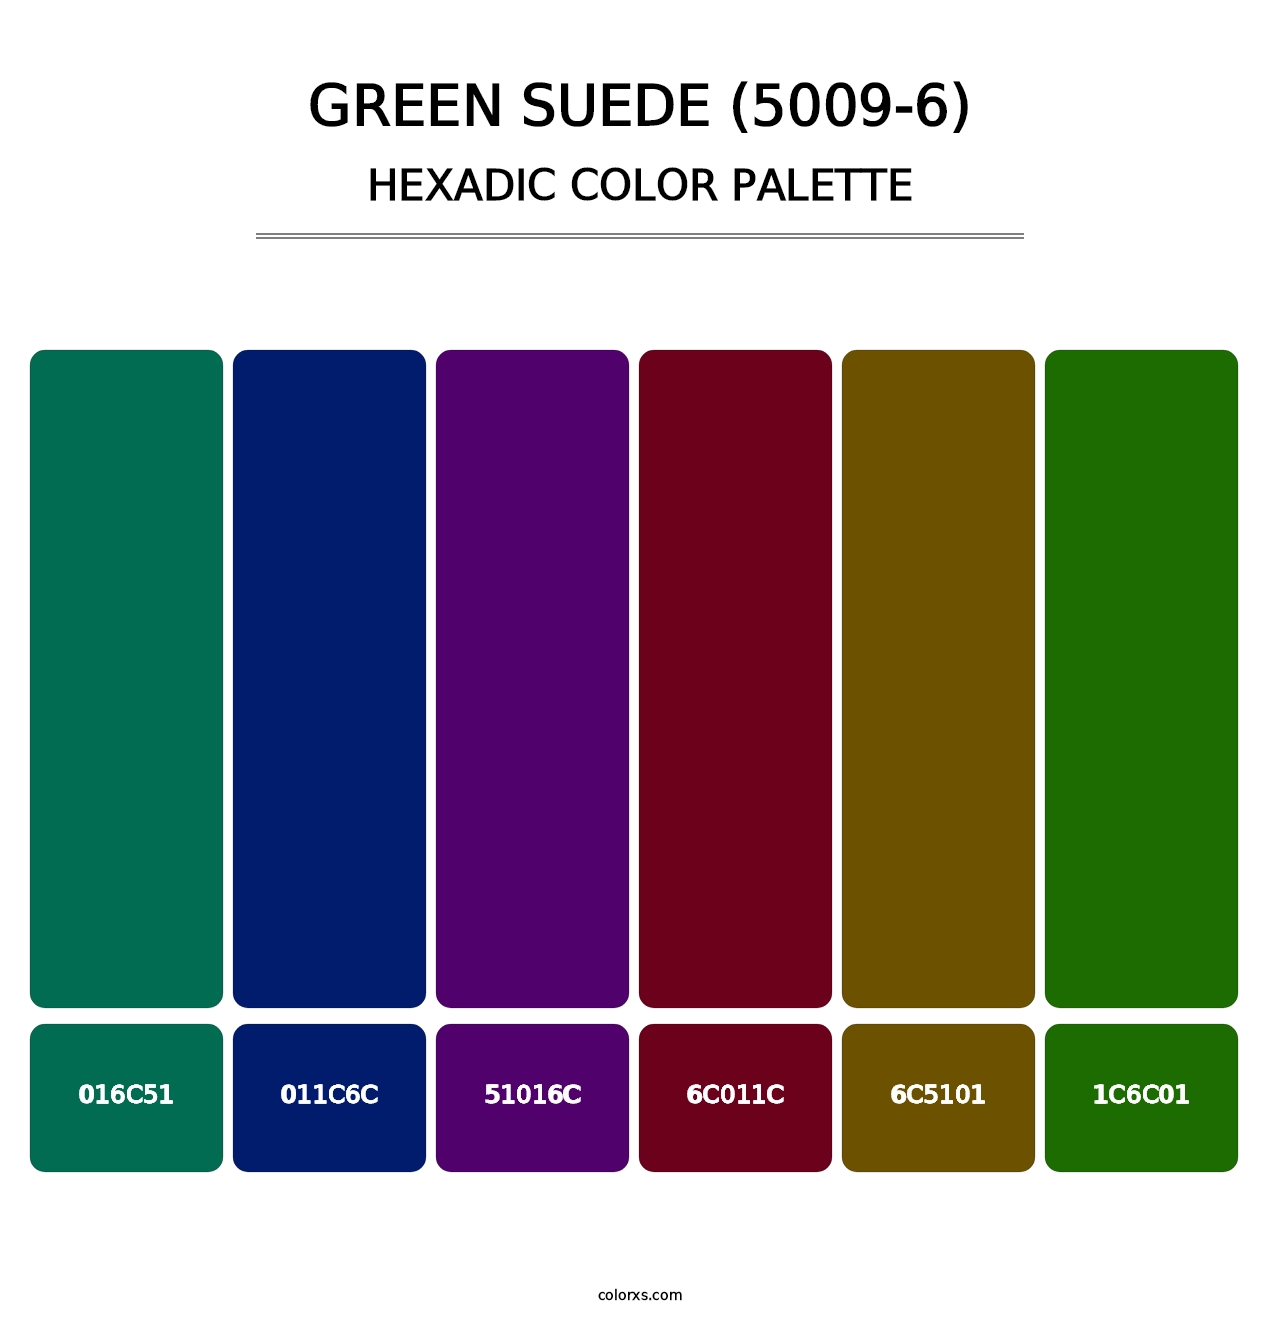 Green Suede (5009-6) - Hexadic Color Palette